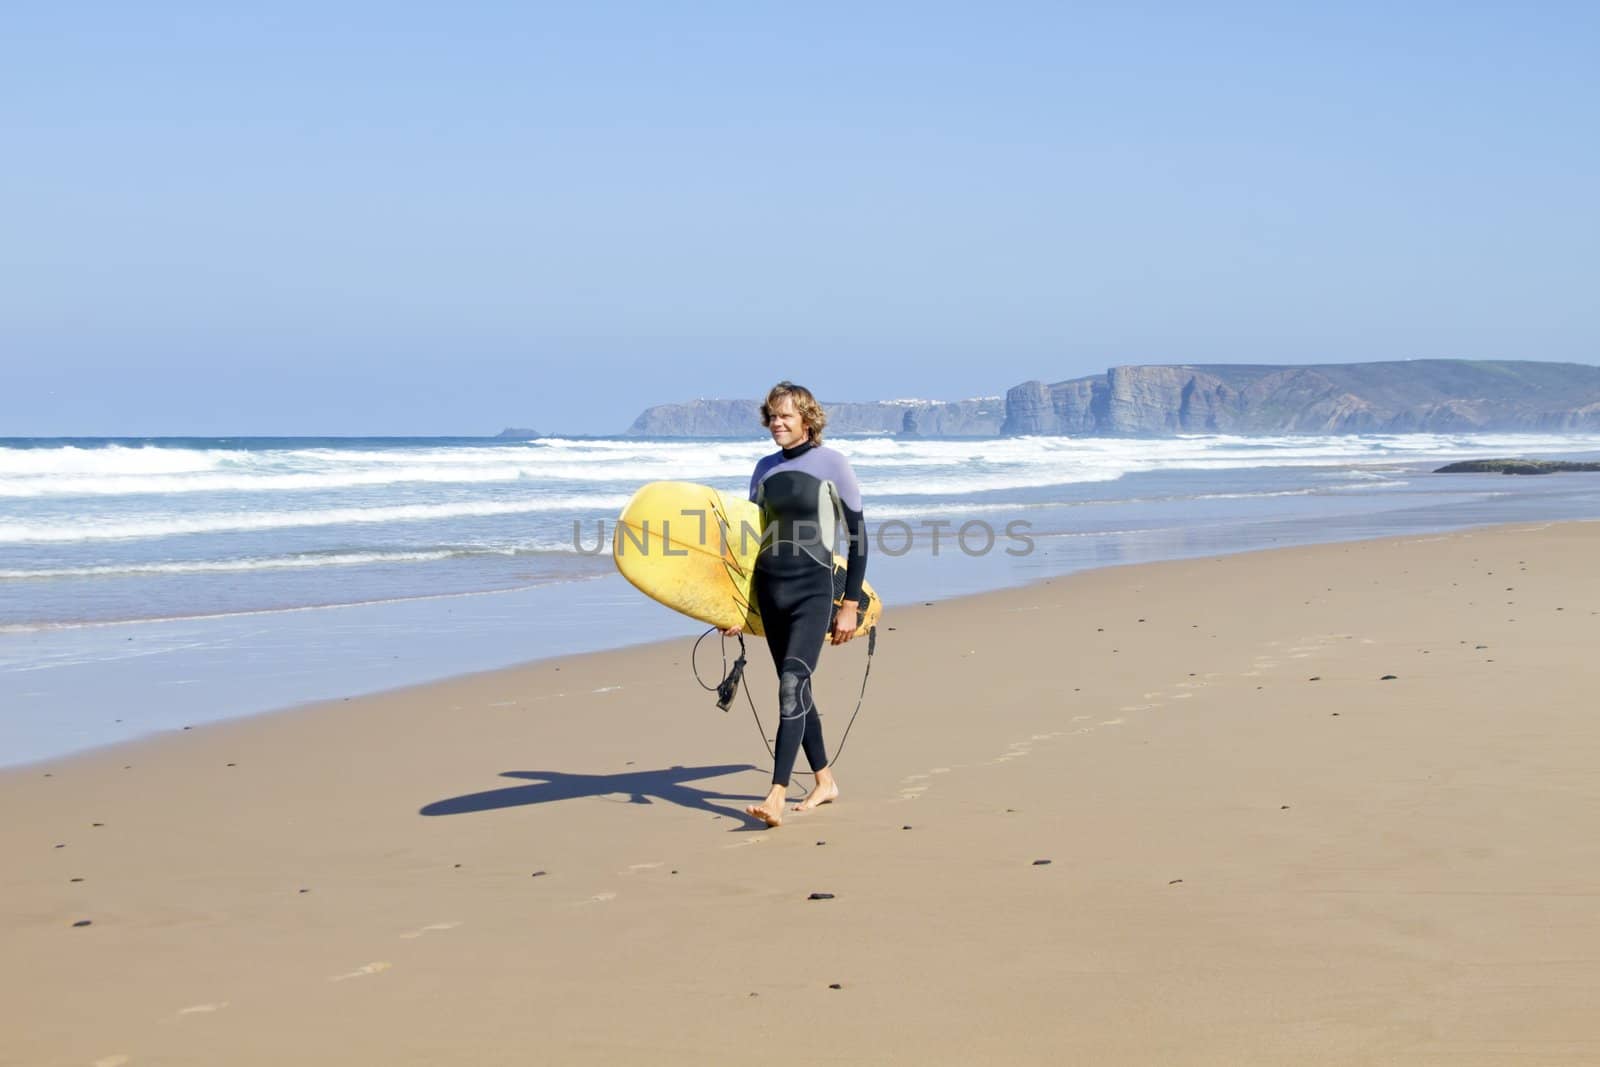 Surfer walking along the beach by devy